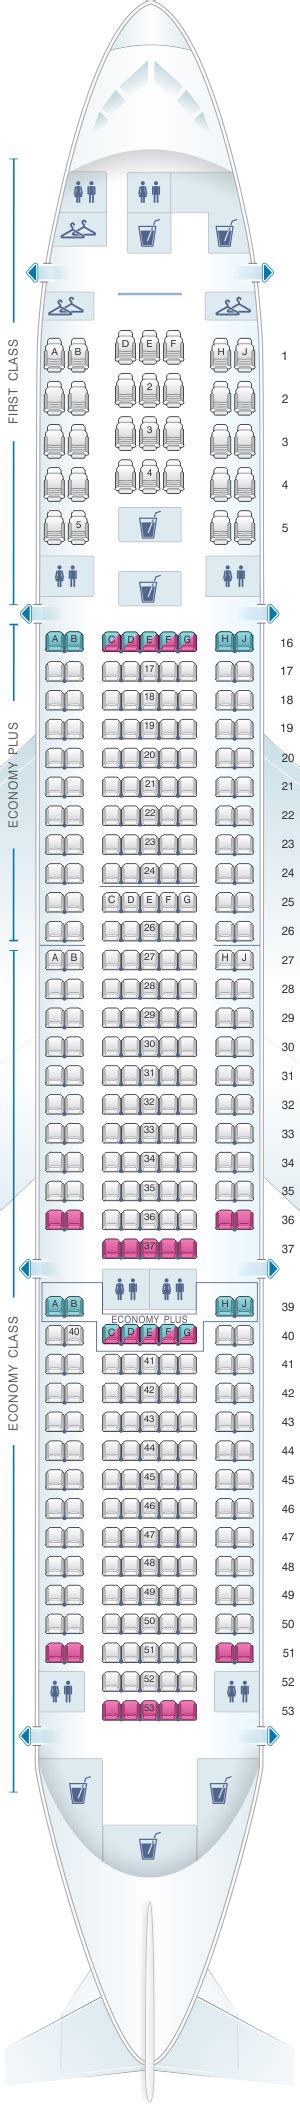 Seat Map United Airlines Boeing B777 200 777 Version 3 Seatmaestro